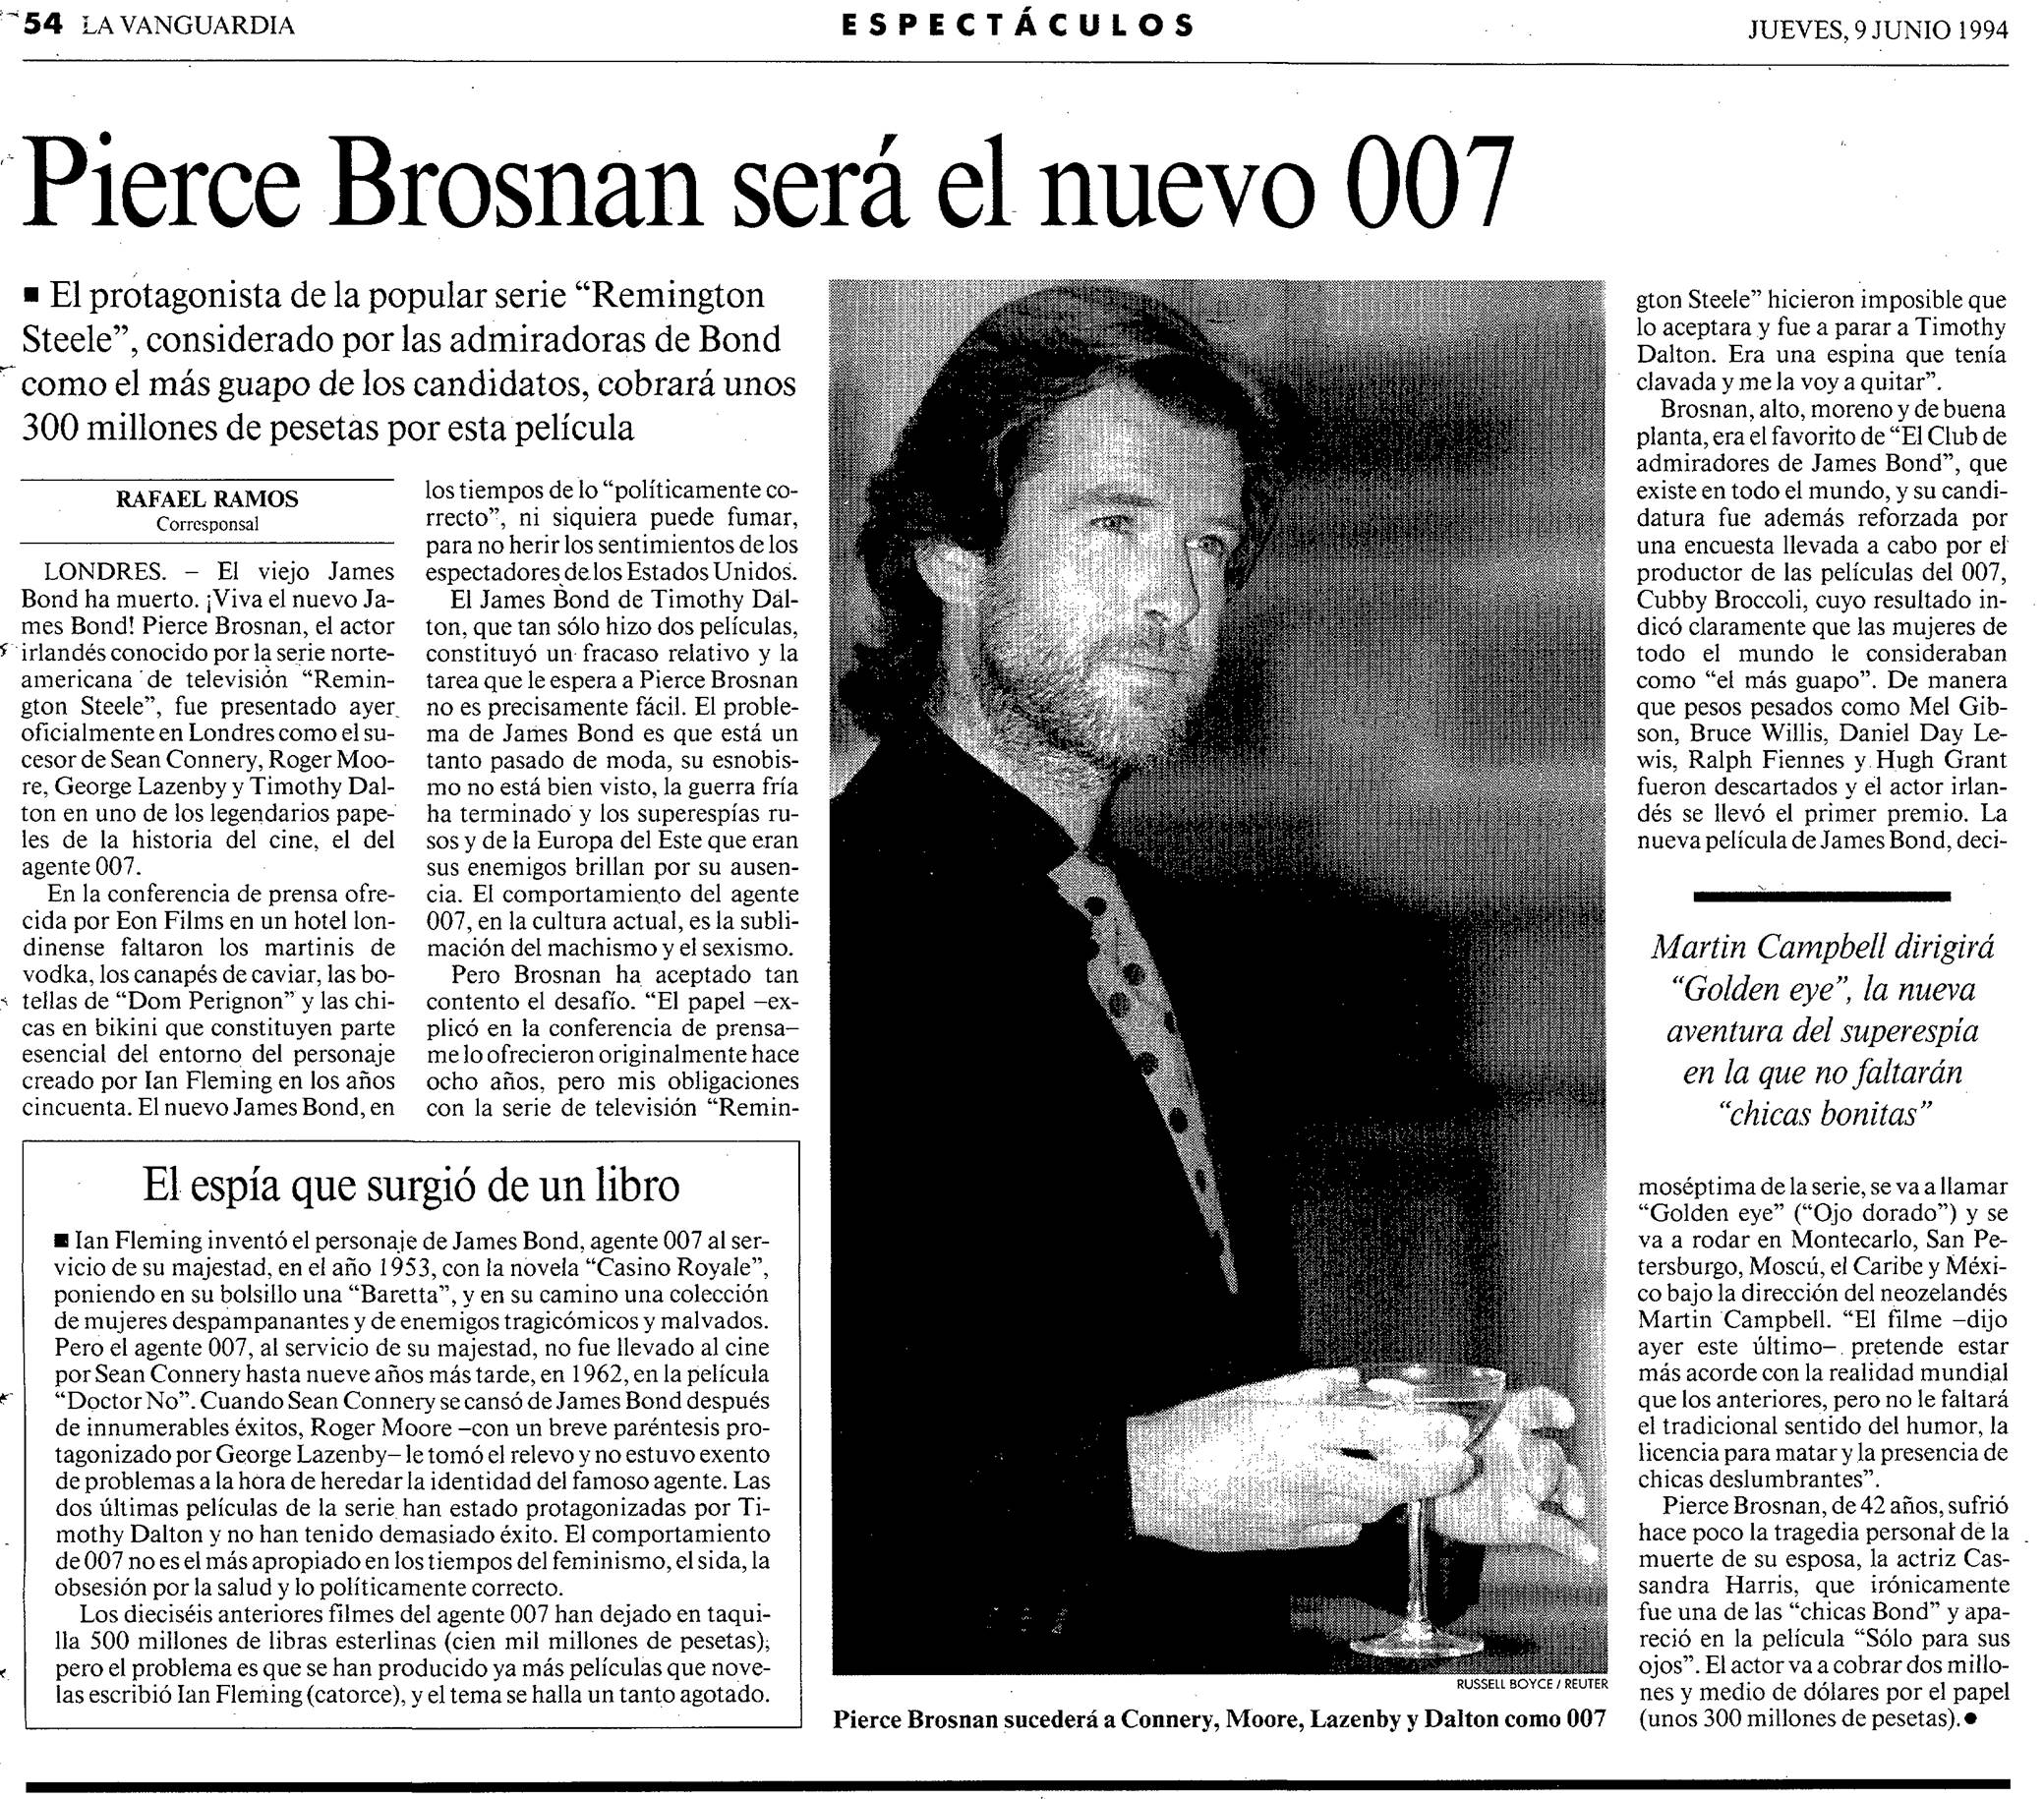 17 1994 06 09 La Vanguardia Barcelona 054 Pierce Brosnan